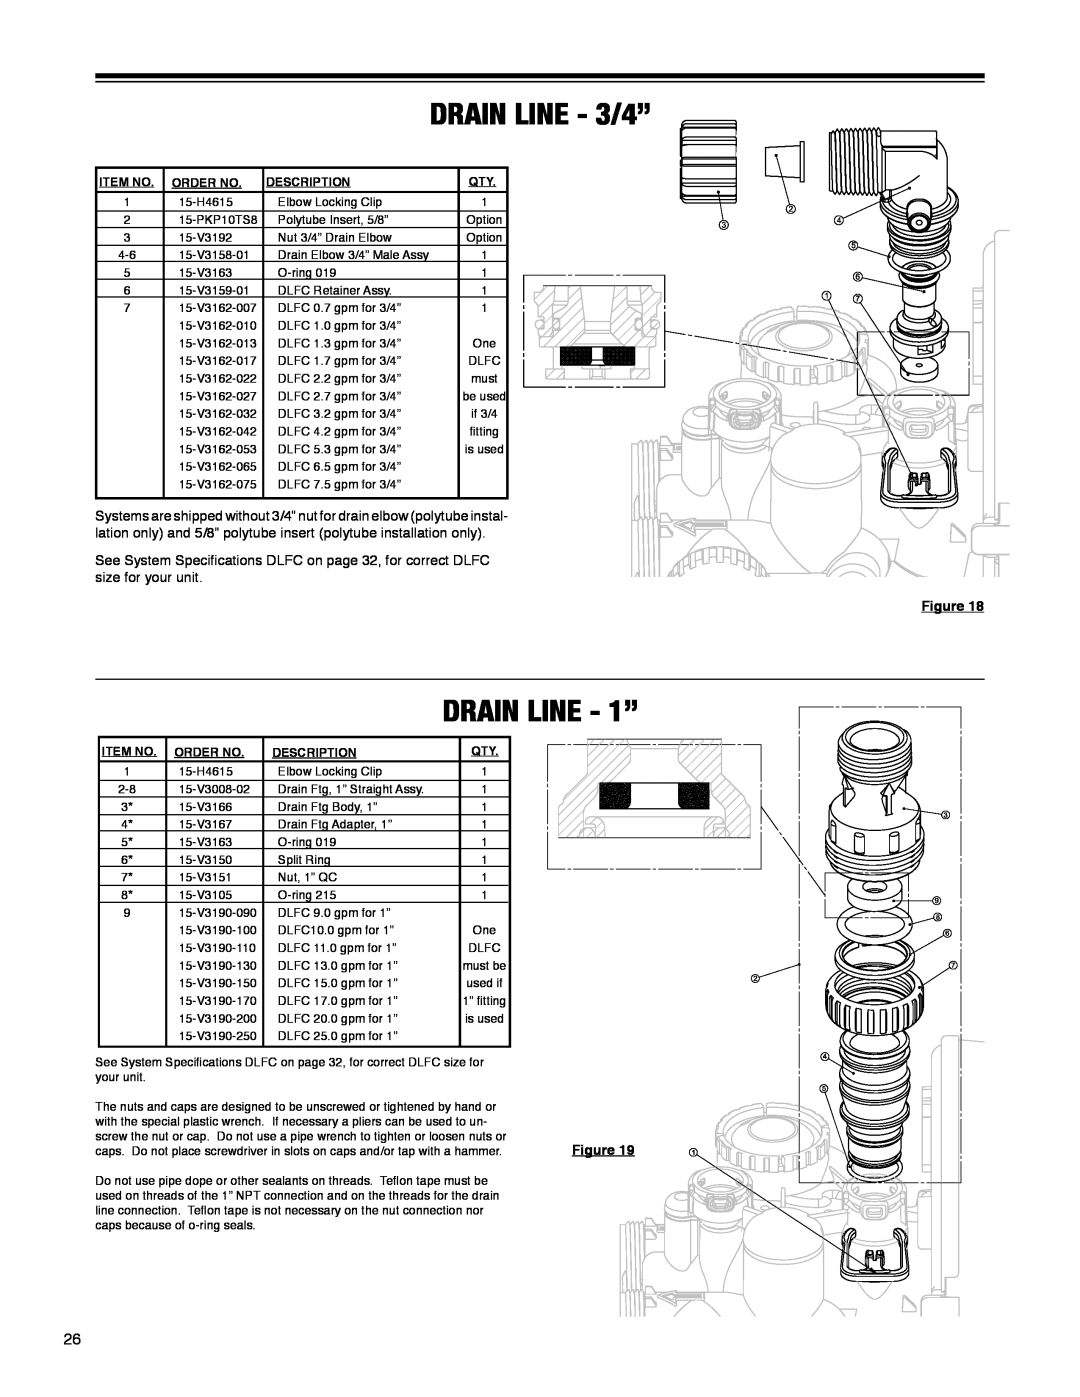 Argosy Research H-125 Series owner manual drain line - 3/4”, drain line - 1” 